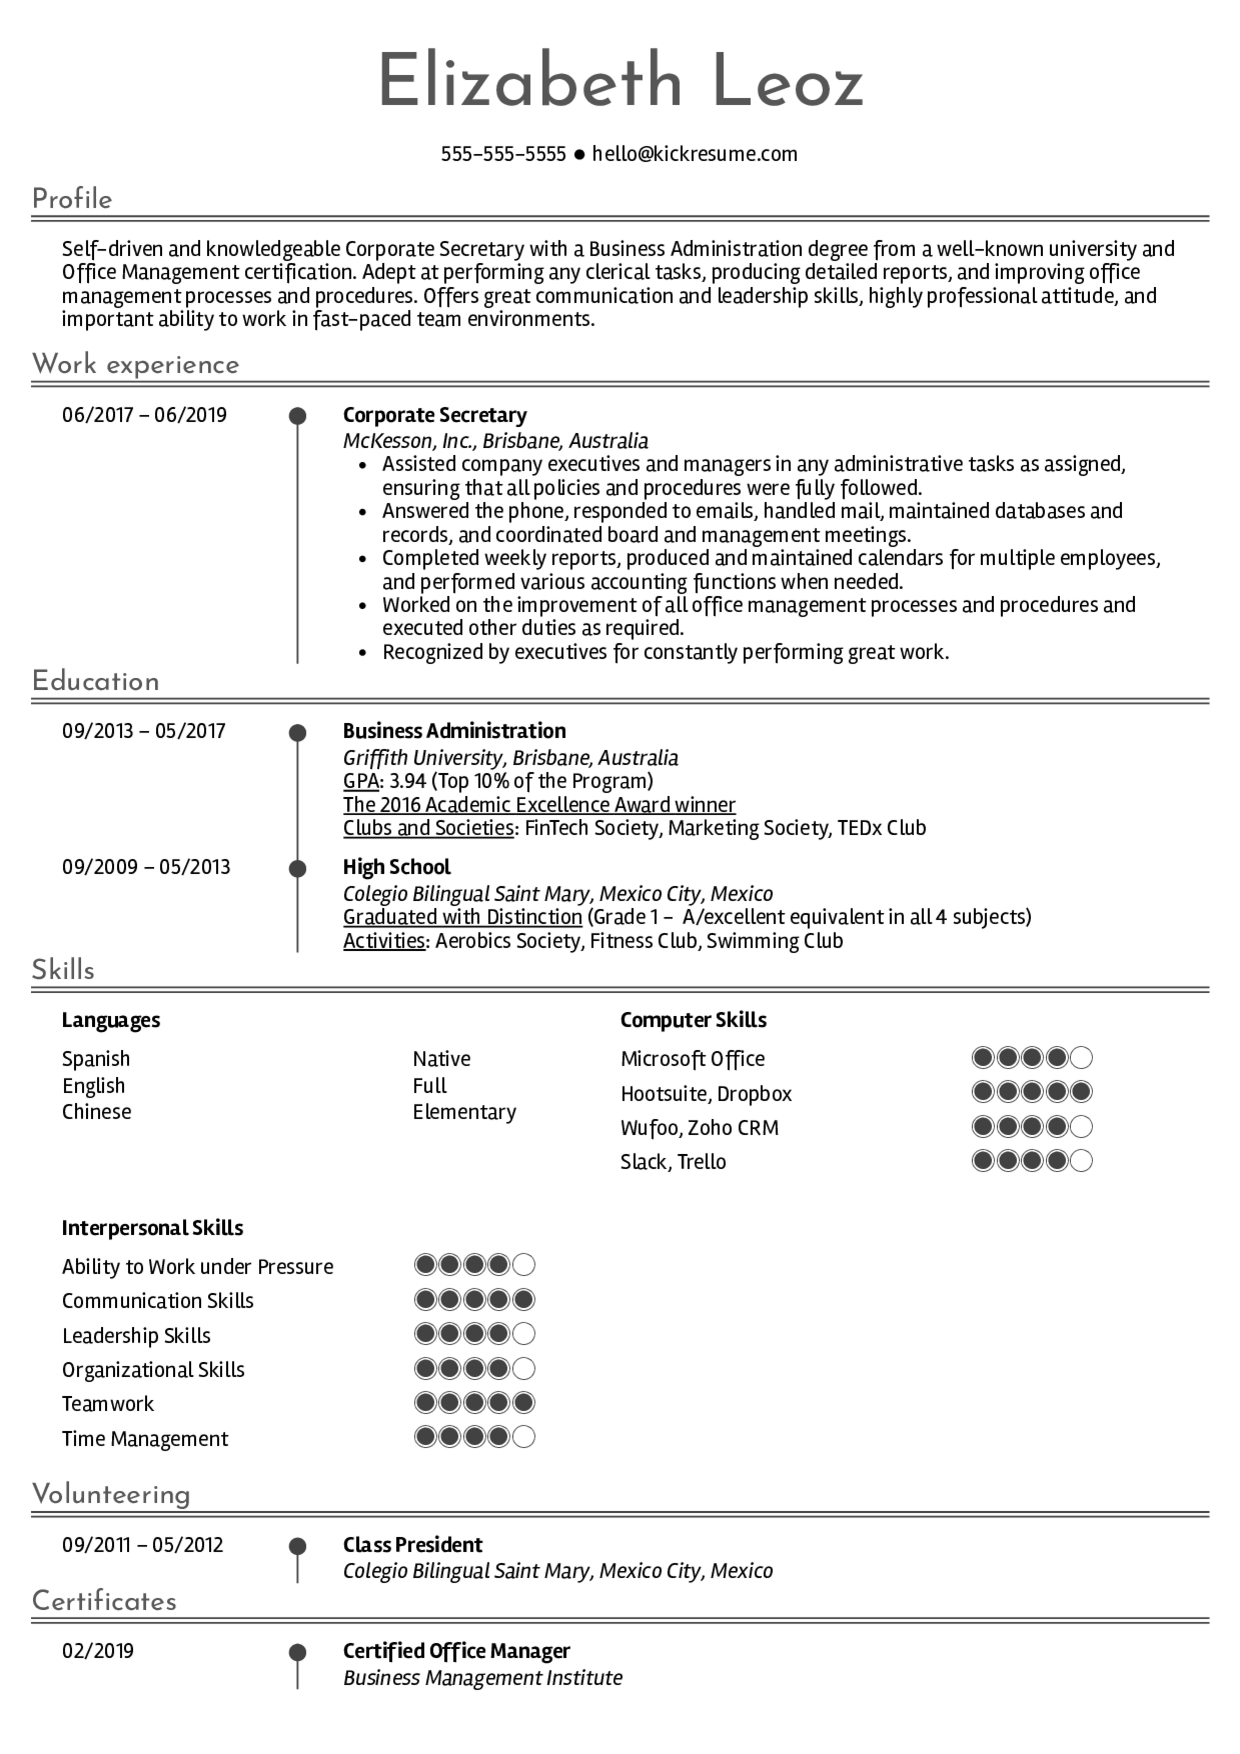 Resume Examplesreal People: Corporate Secretary Resume Regarding Corporate Secretary Certificate Template